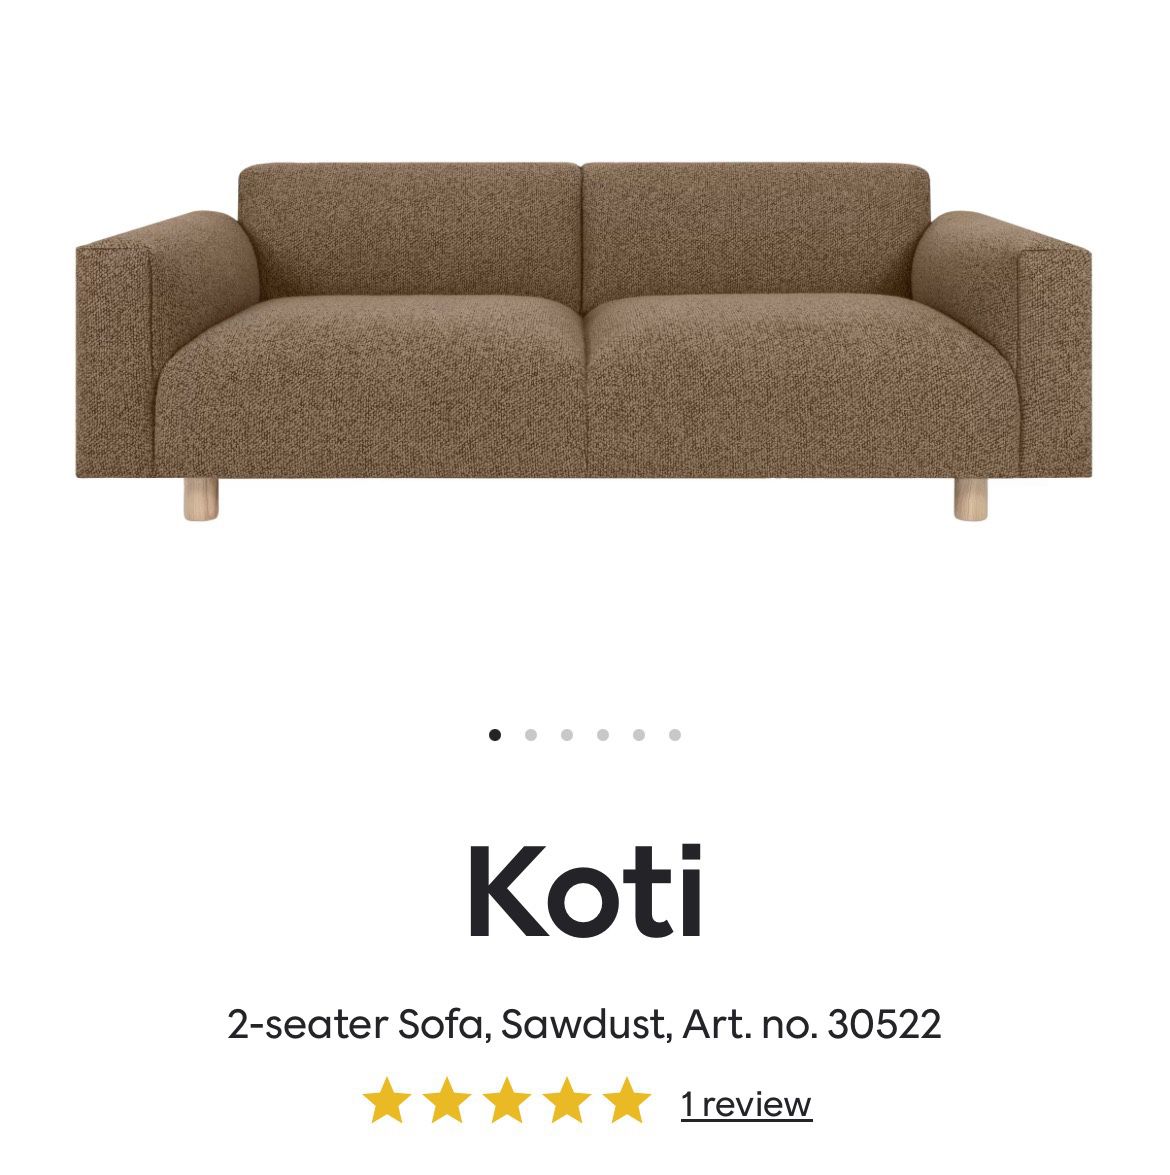 Hem Design Koti 2-seater Sofa in Sawdust color. 